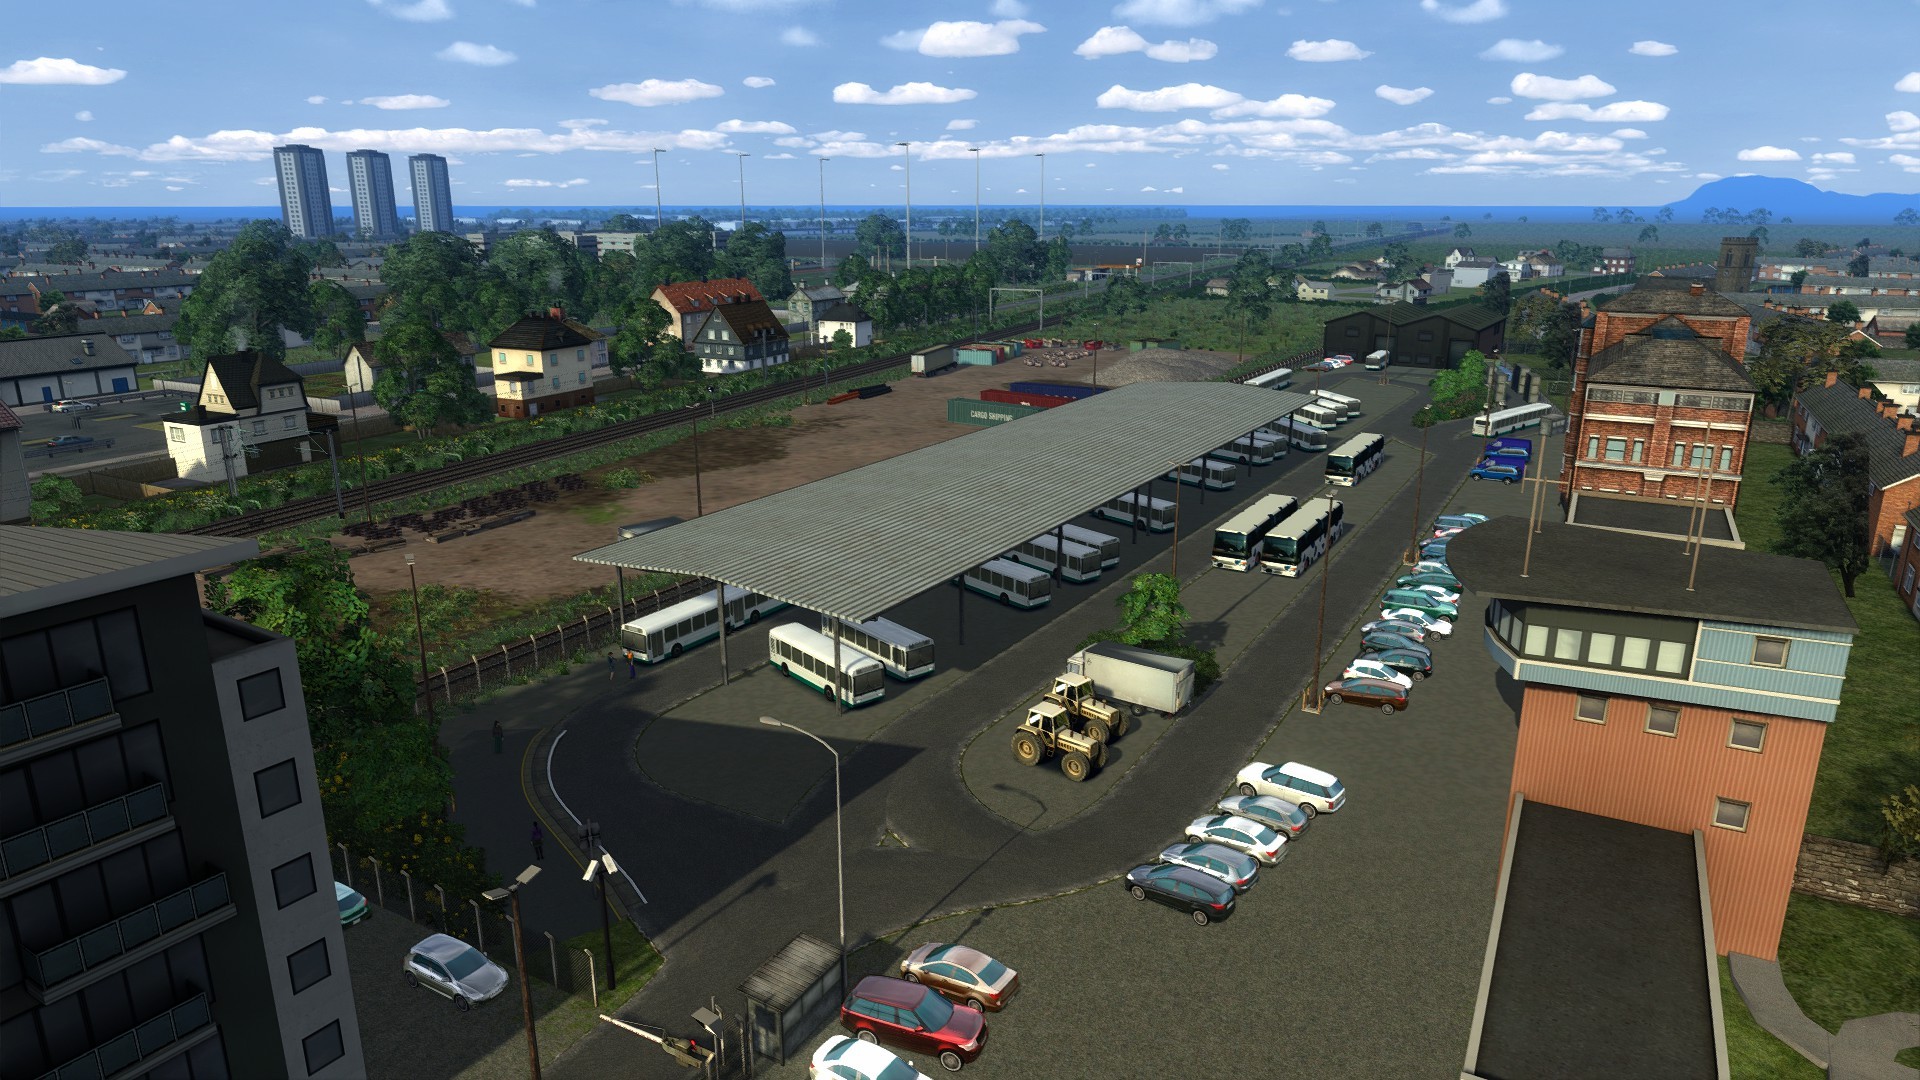 Serinathea bus depot